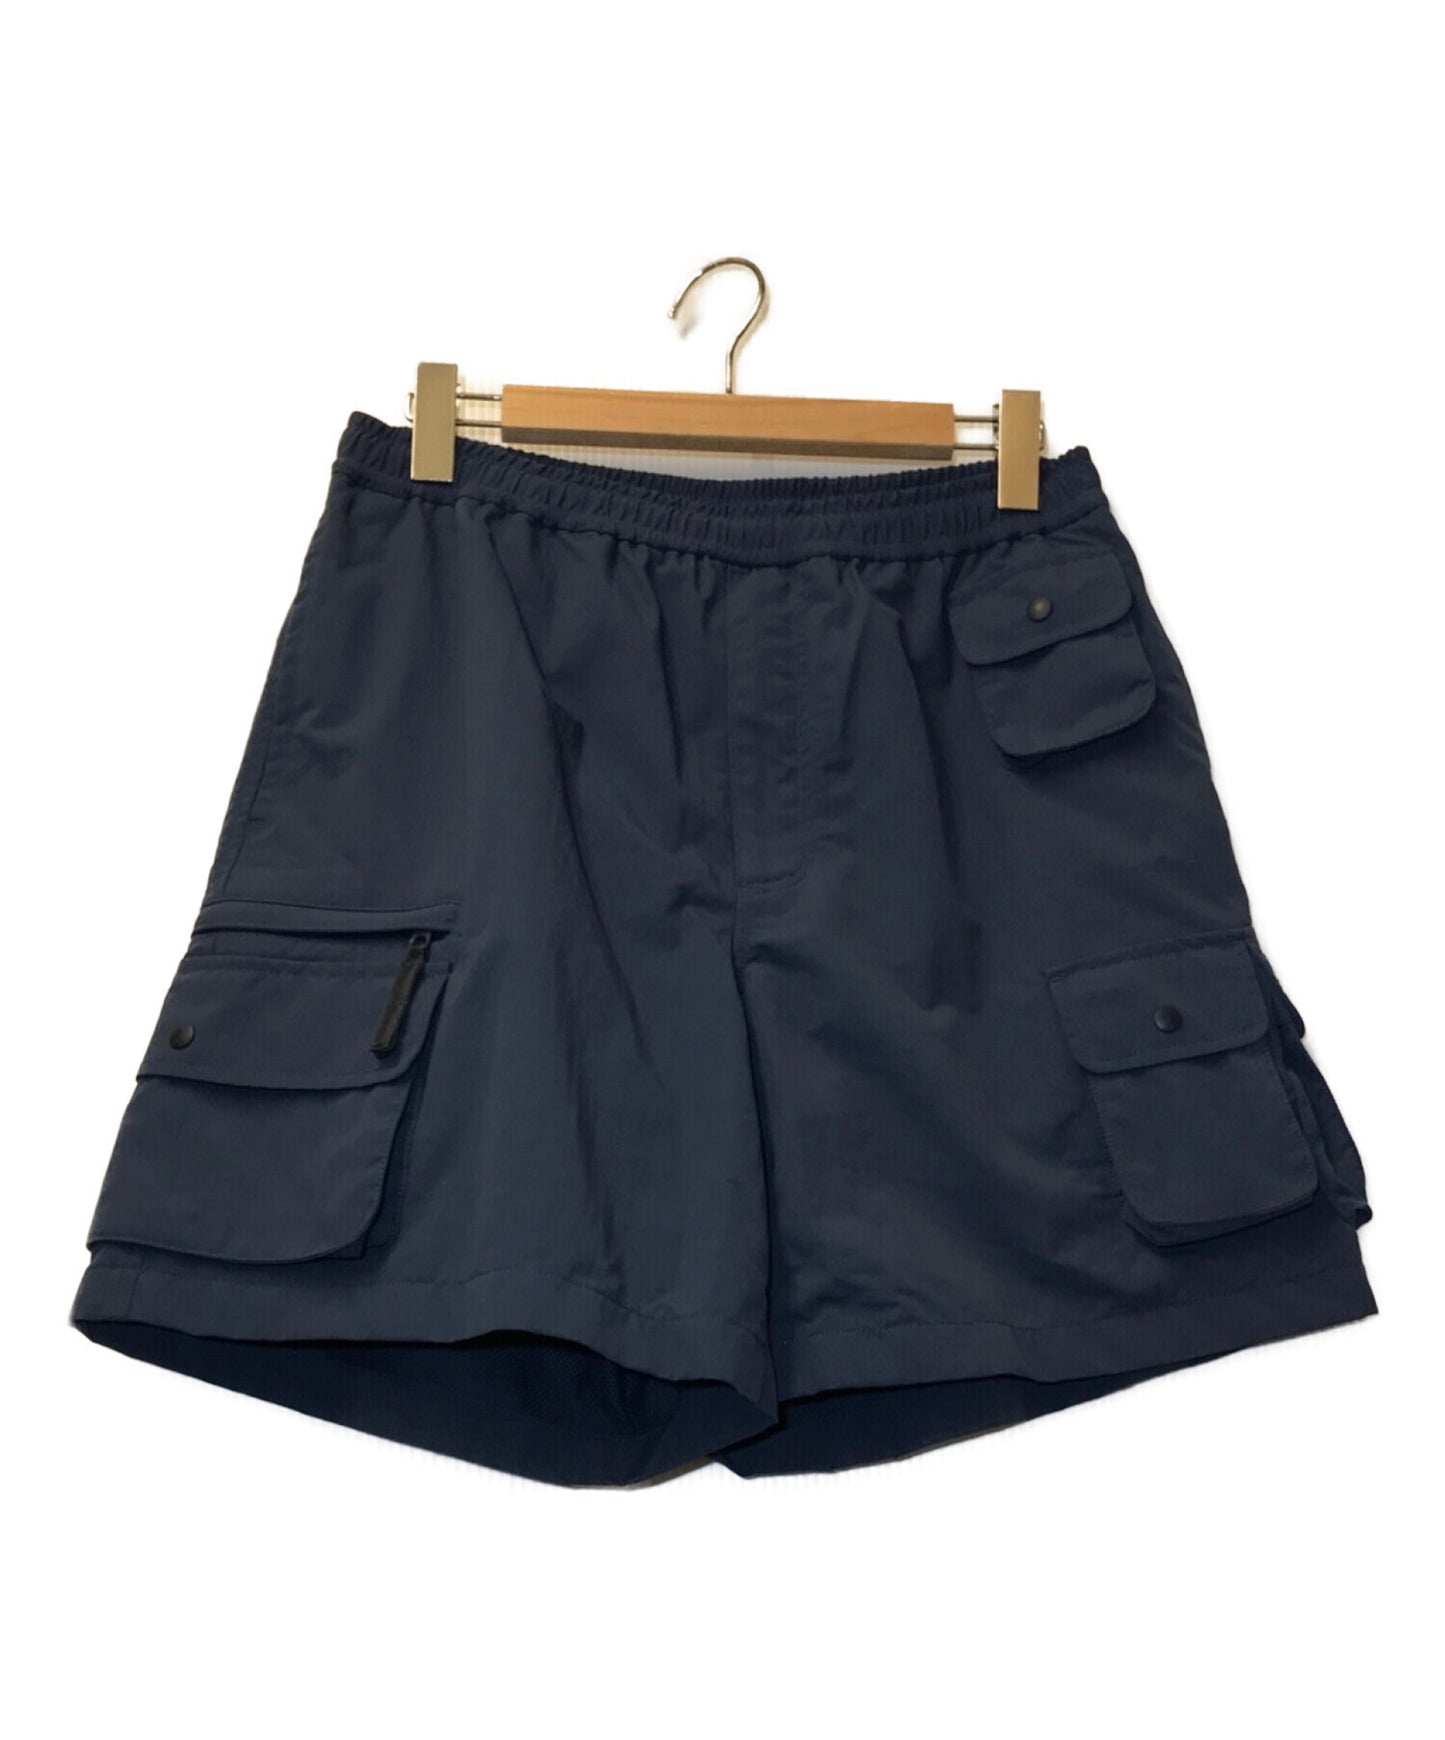 Daiwa Pier39 Tech Hiker Mountain Shorts Shorts Shorts Harm Pants Shorts BP-53022